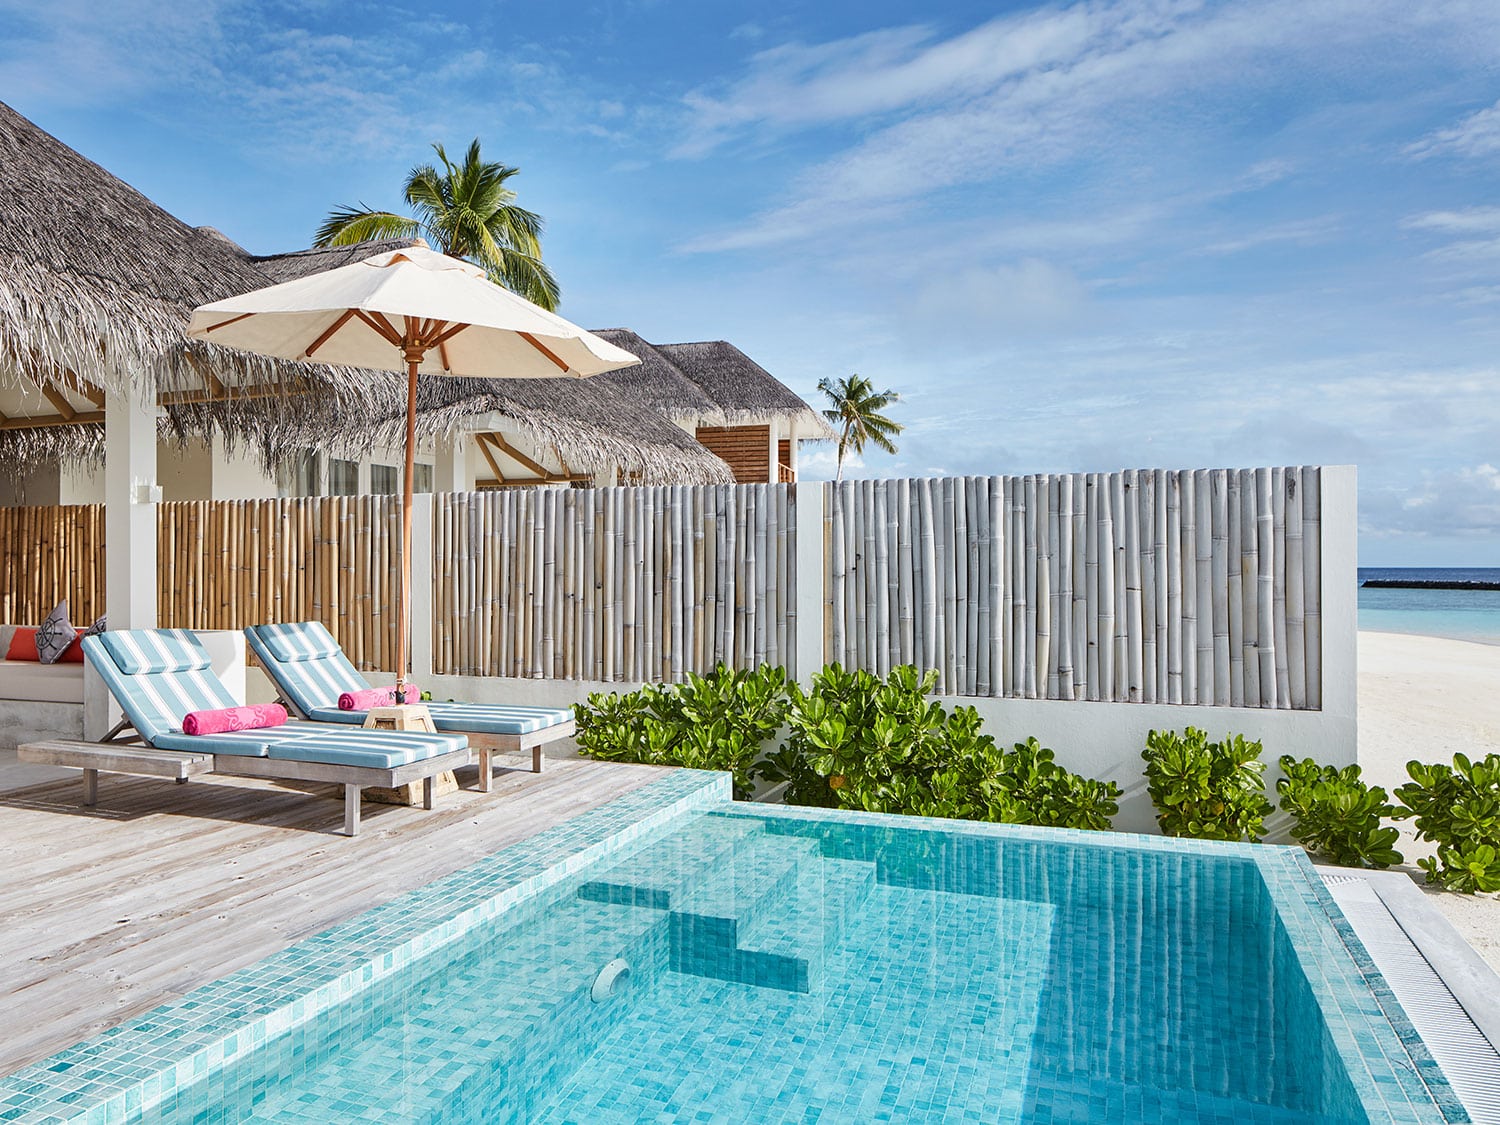 The private pool of a beach suite at Sun Siyam Iru Veli in the Maldives